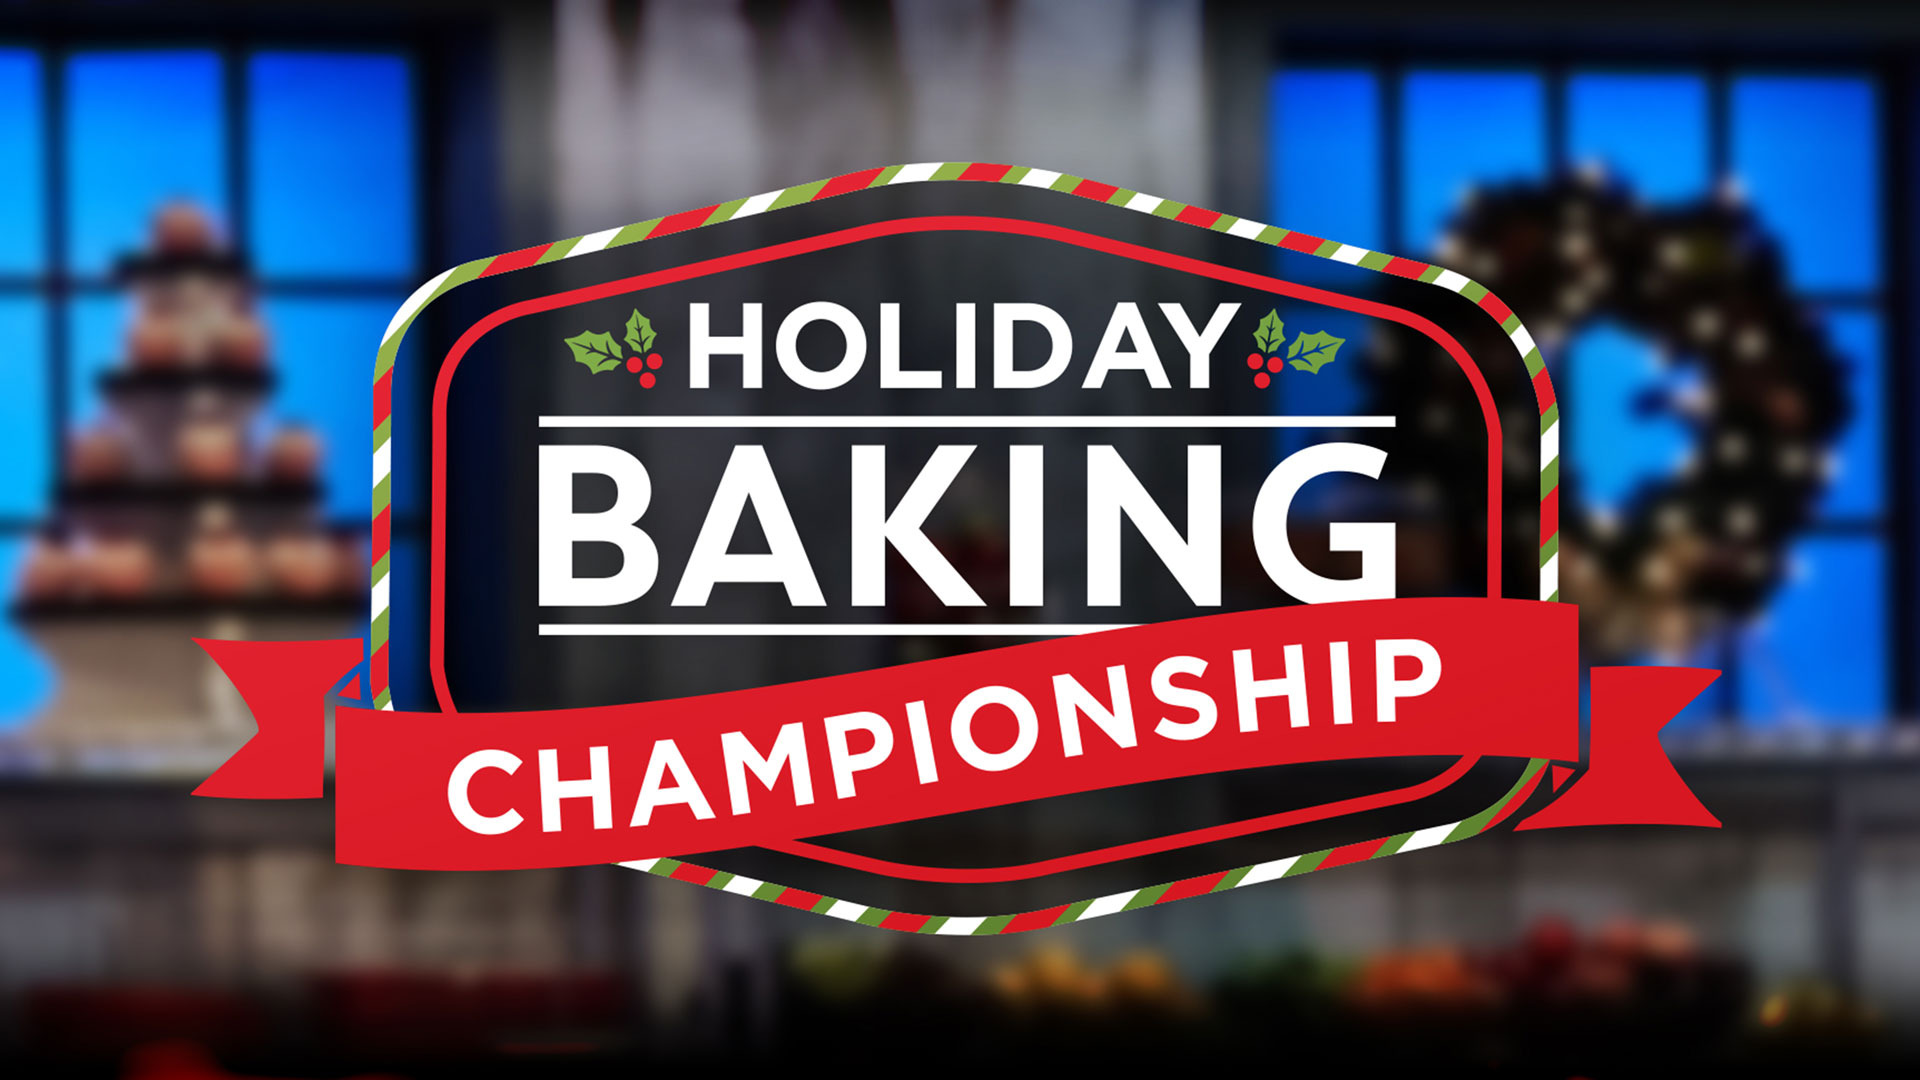 Show Holiday Baking Championship